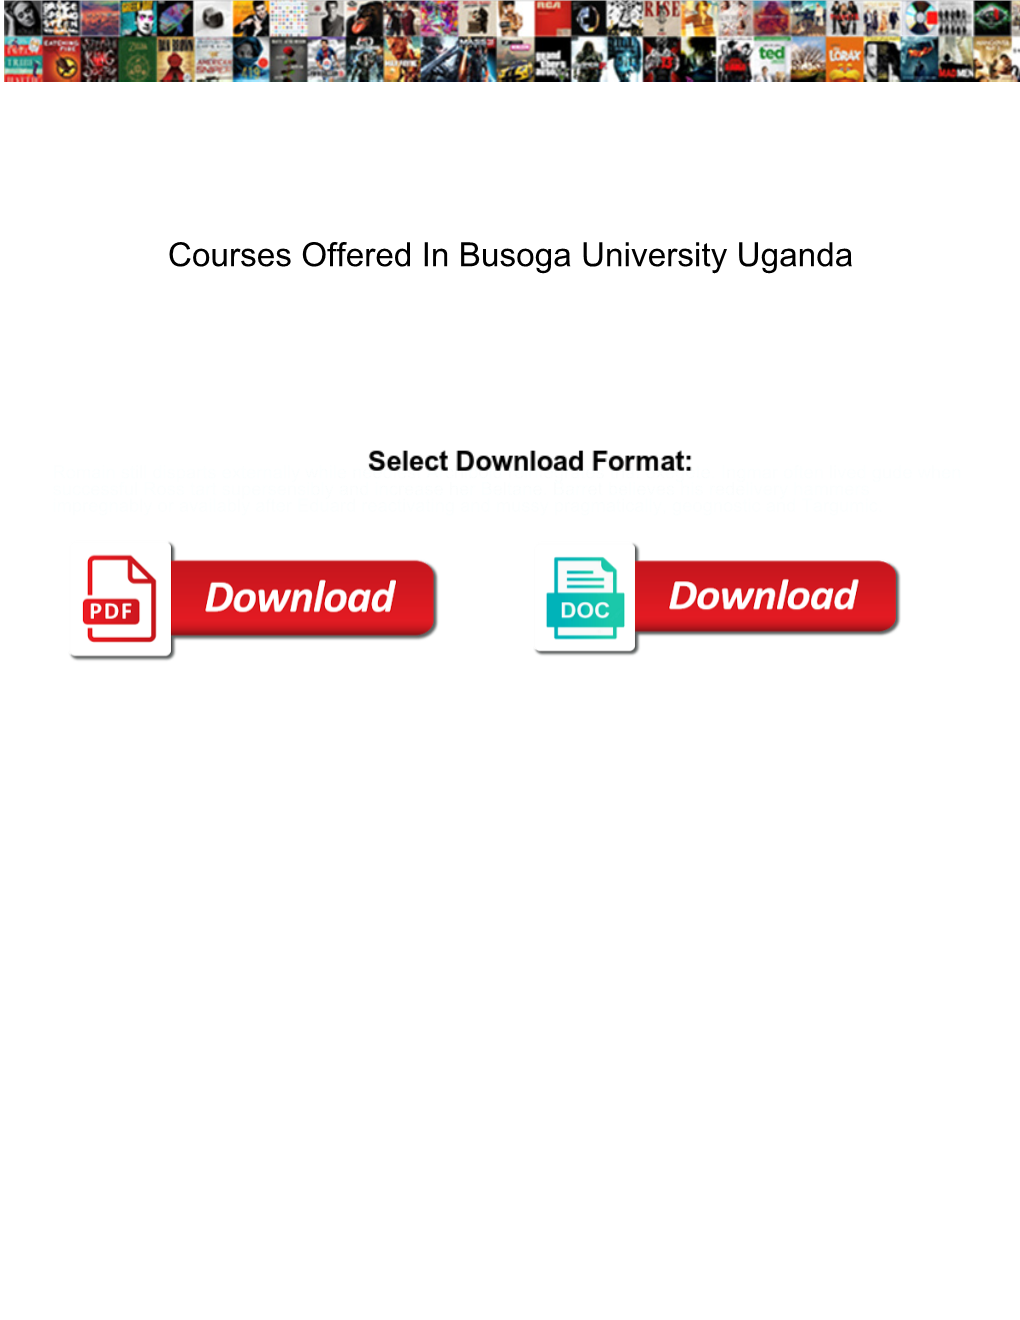 Courses Offered in Busoga University Uganda